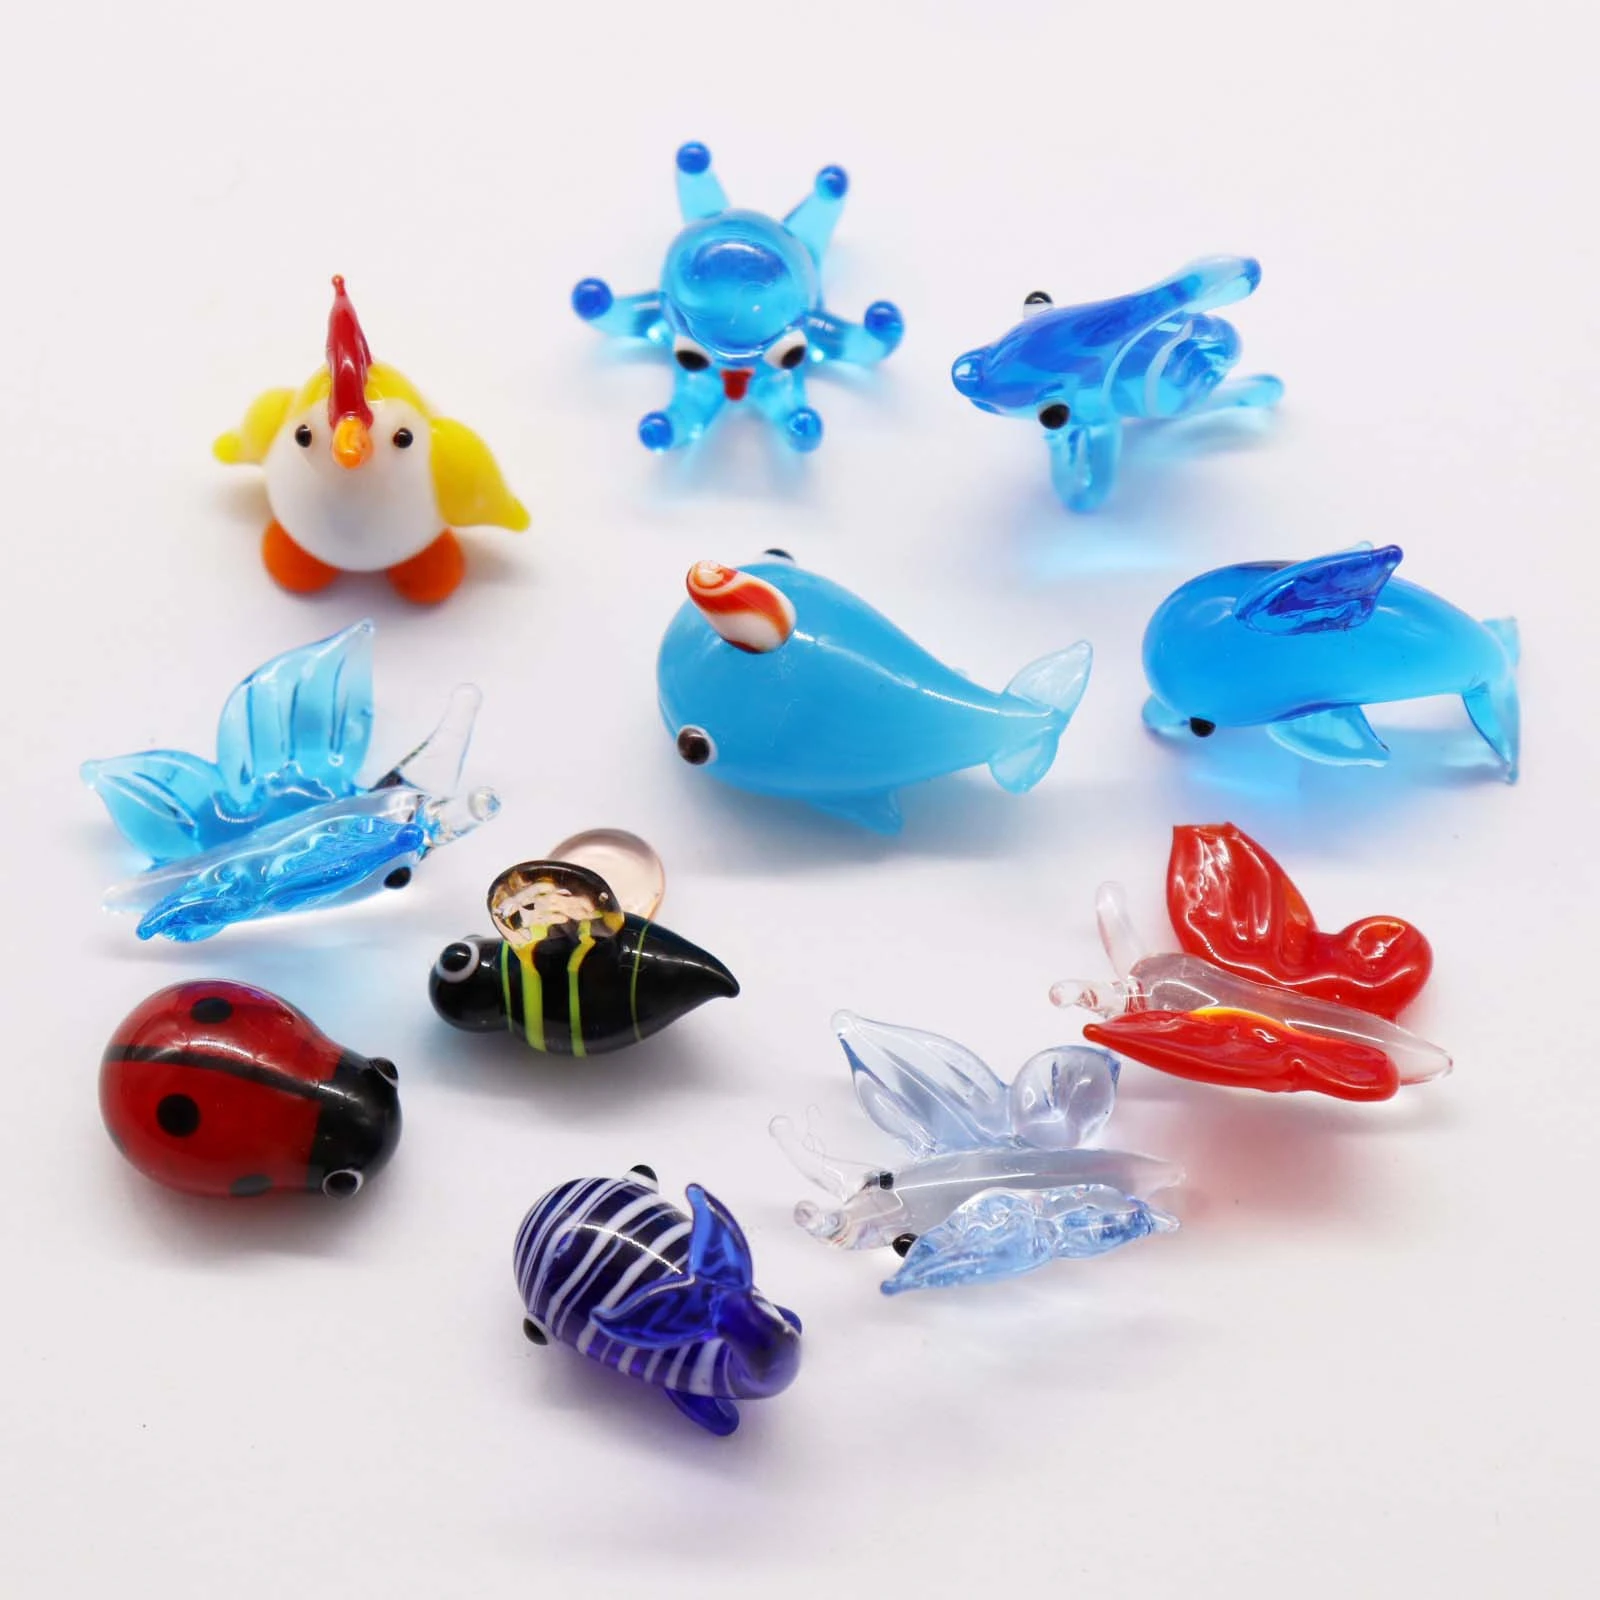 custom crystal glass murano small sea animal figurines hand blown collectible craft home decor aquarium diy